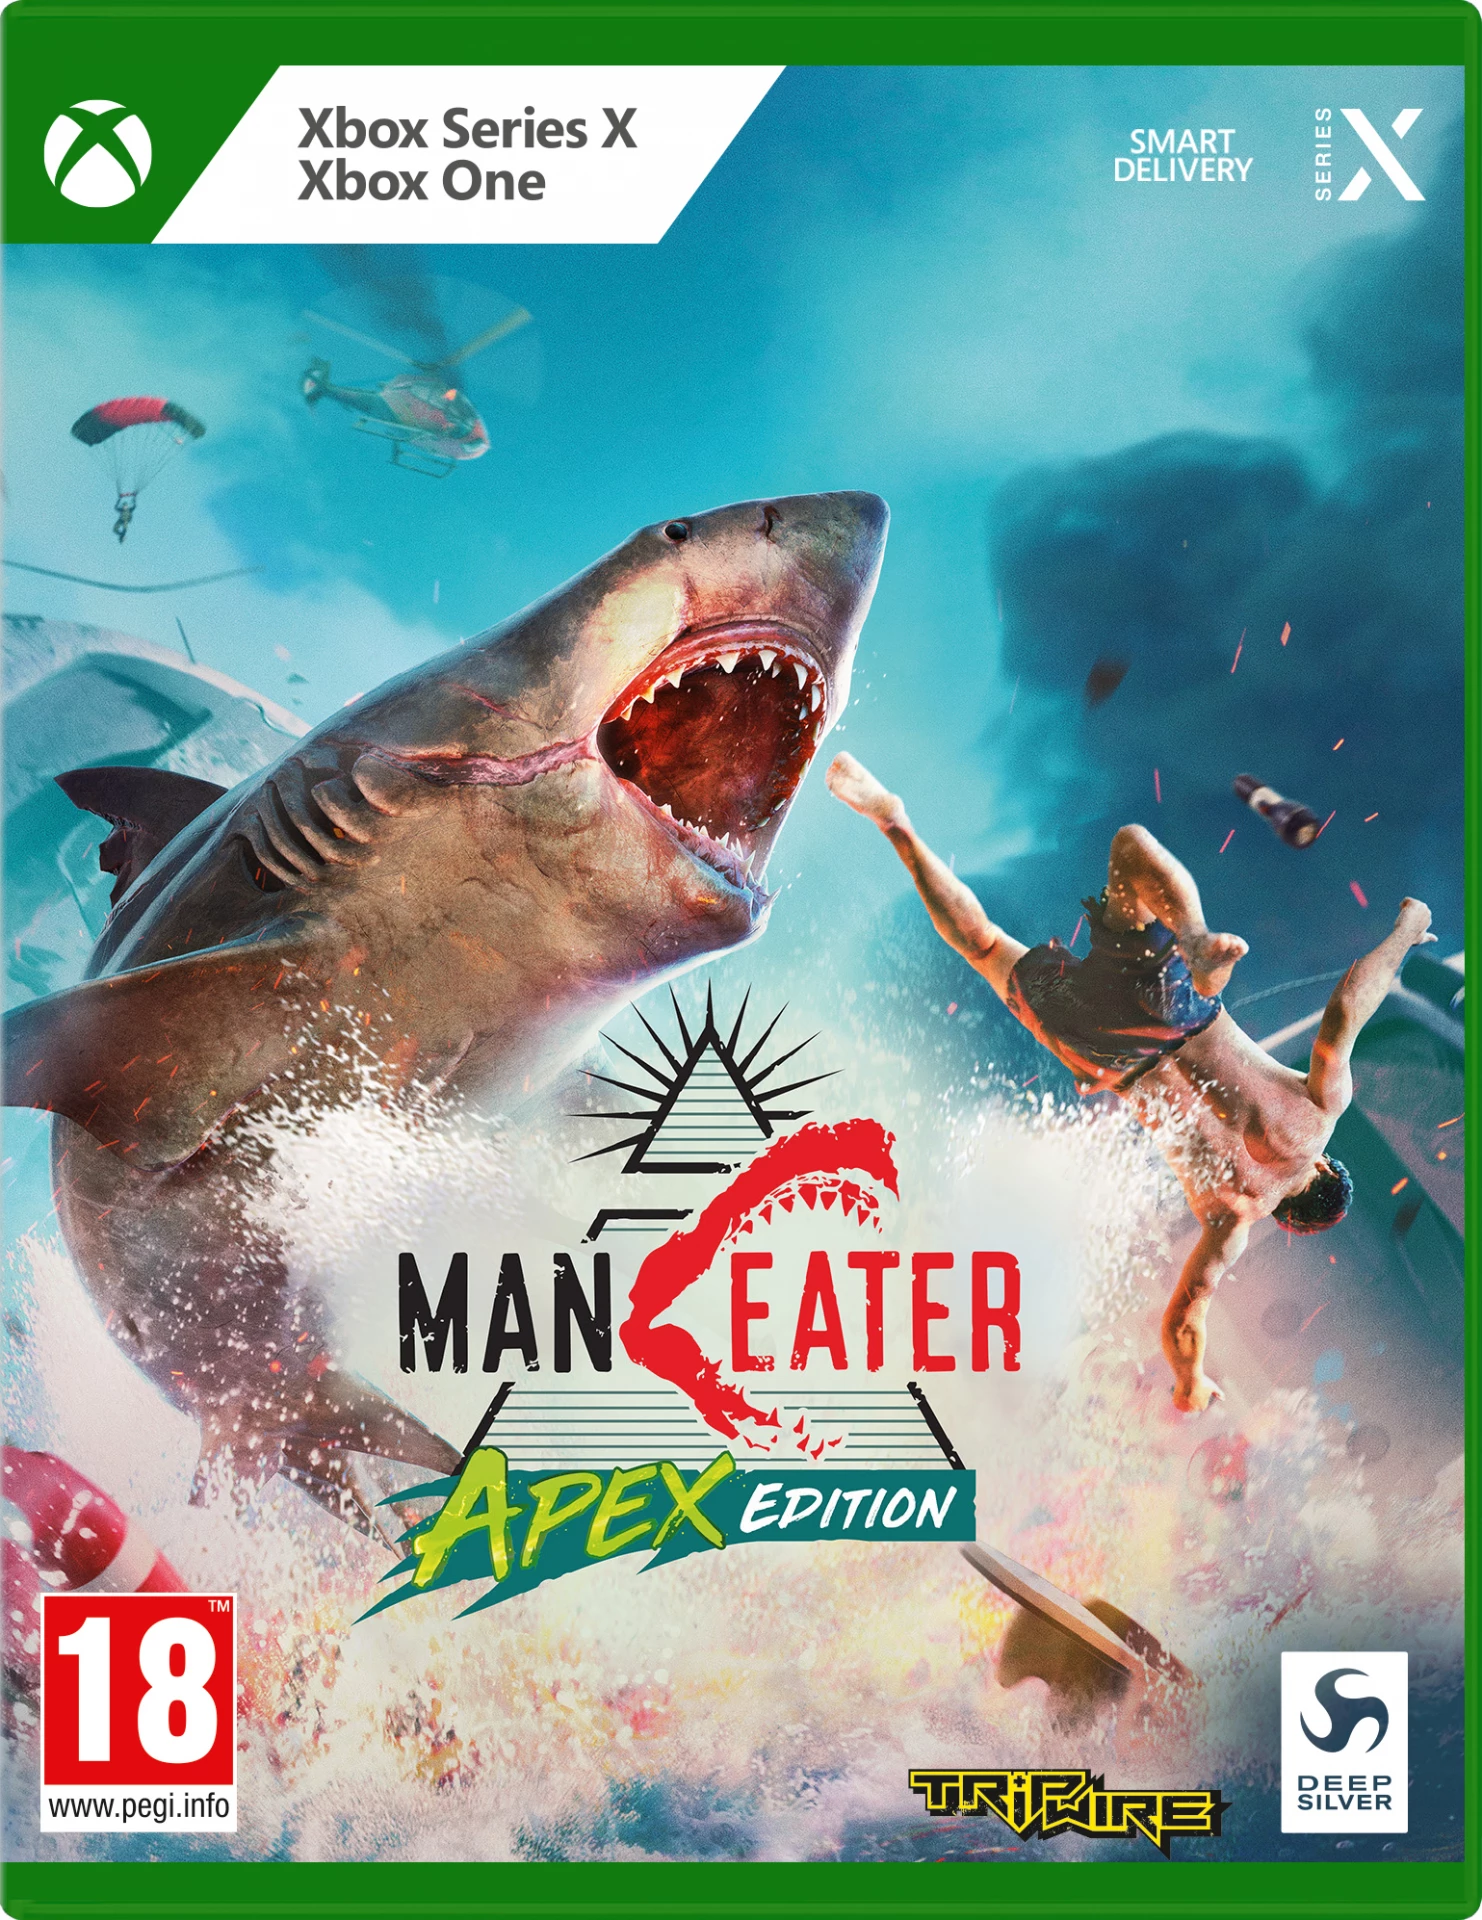 ManEater - Apex Edition (Xbox One), Tripwire